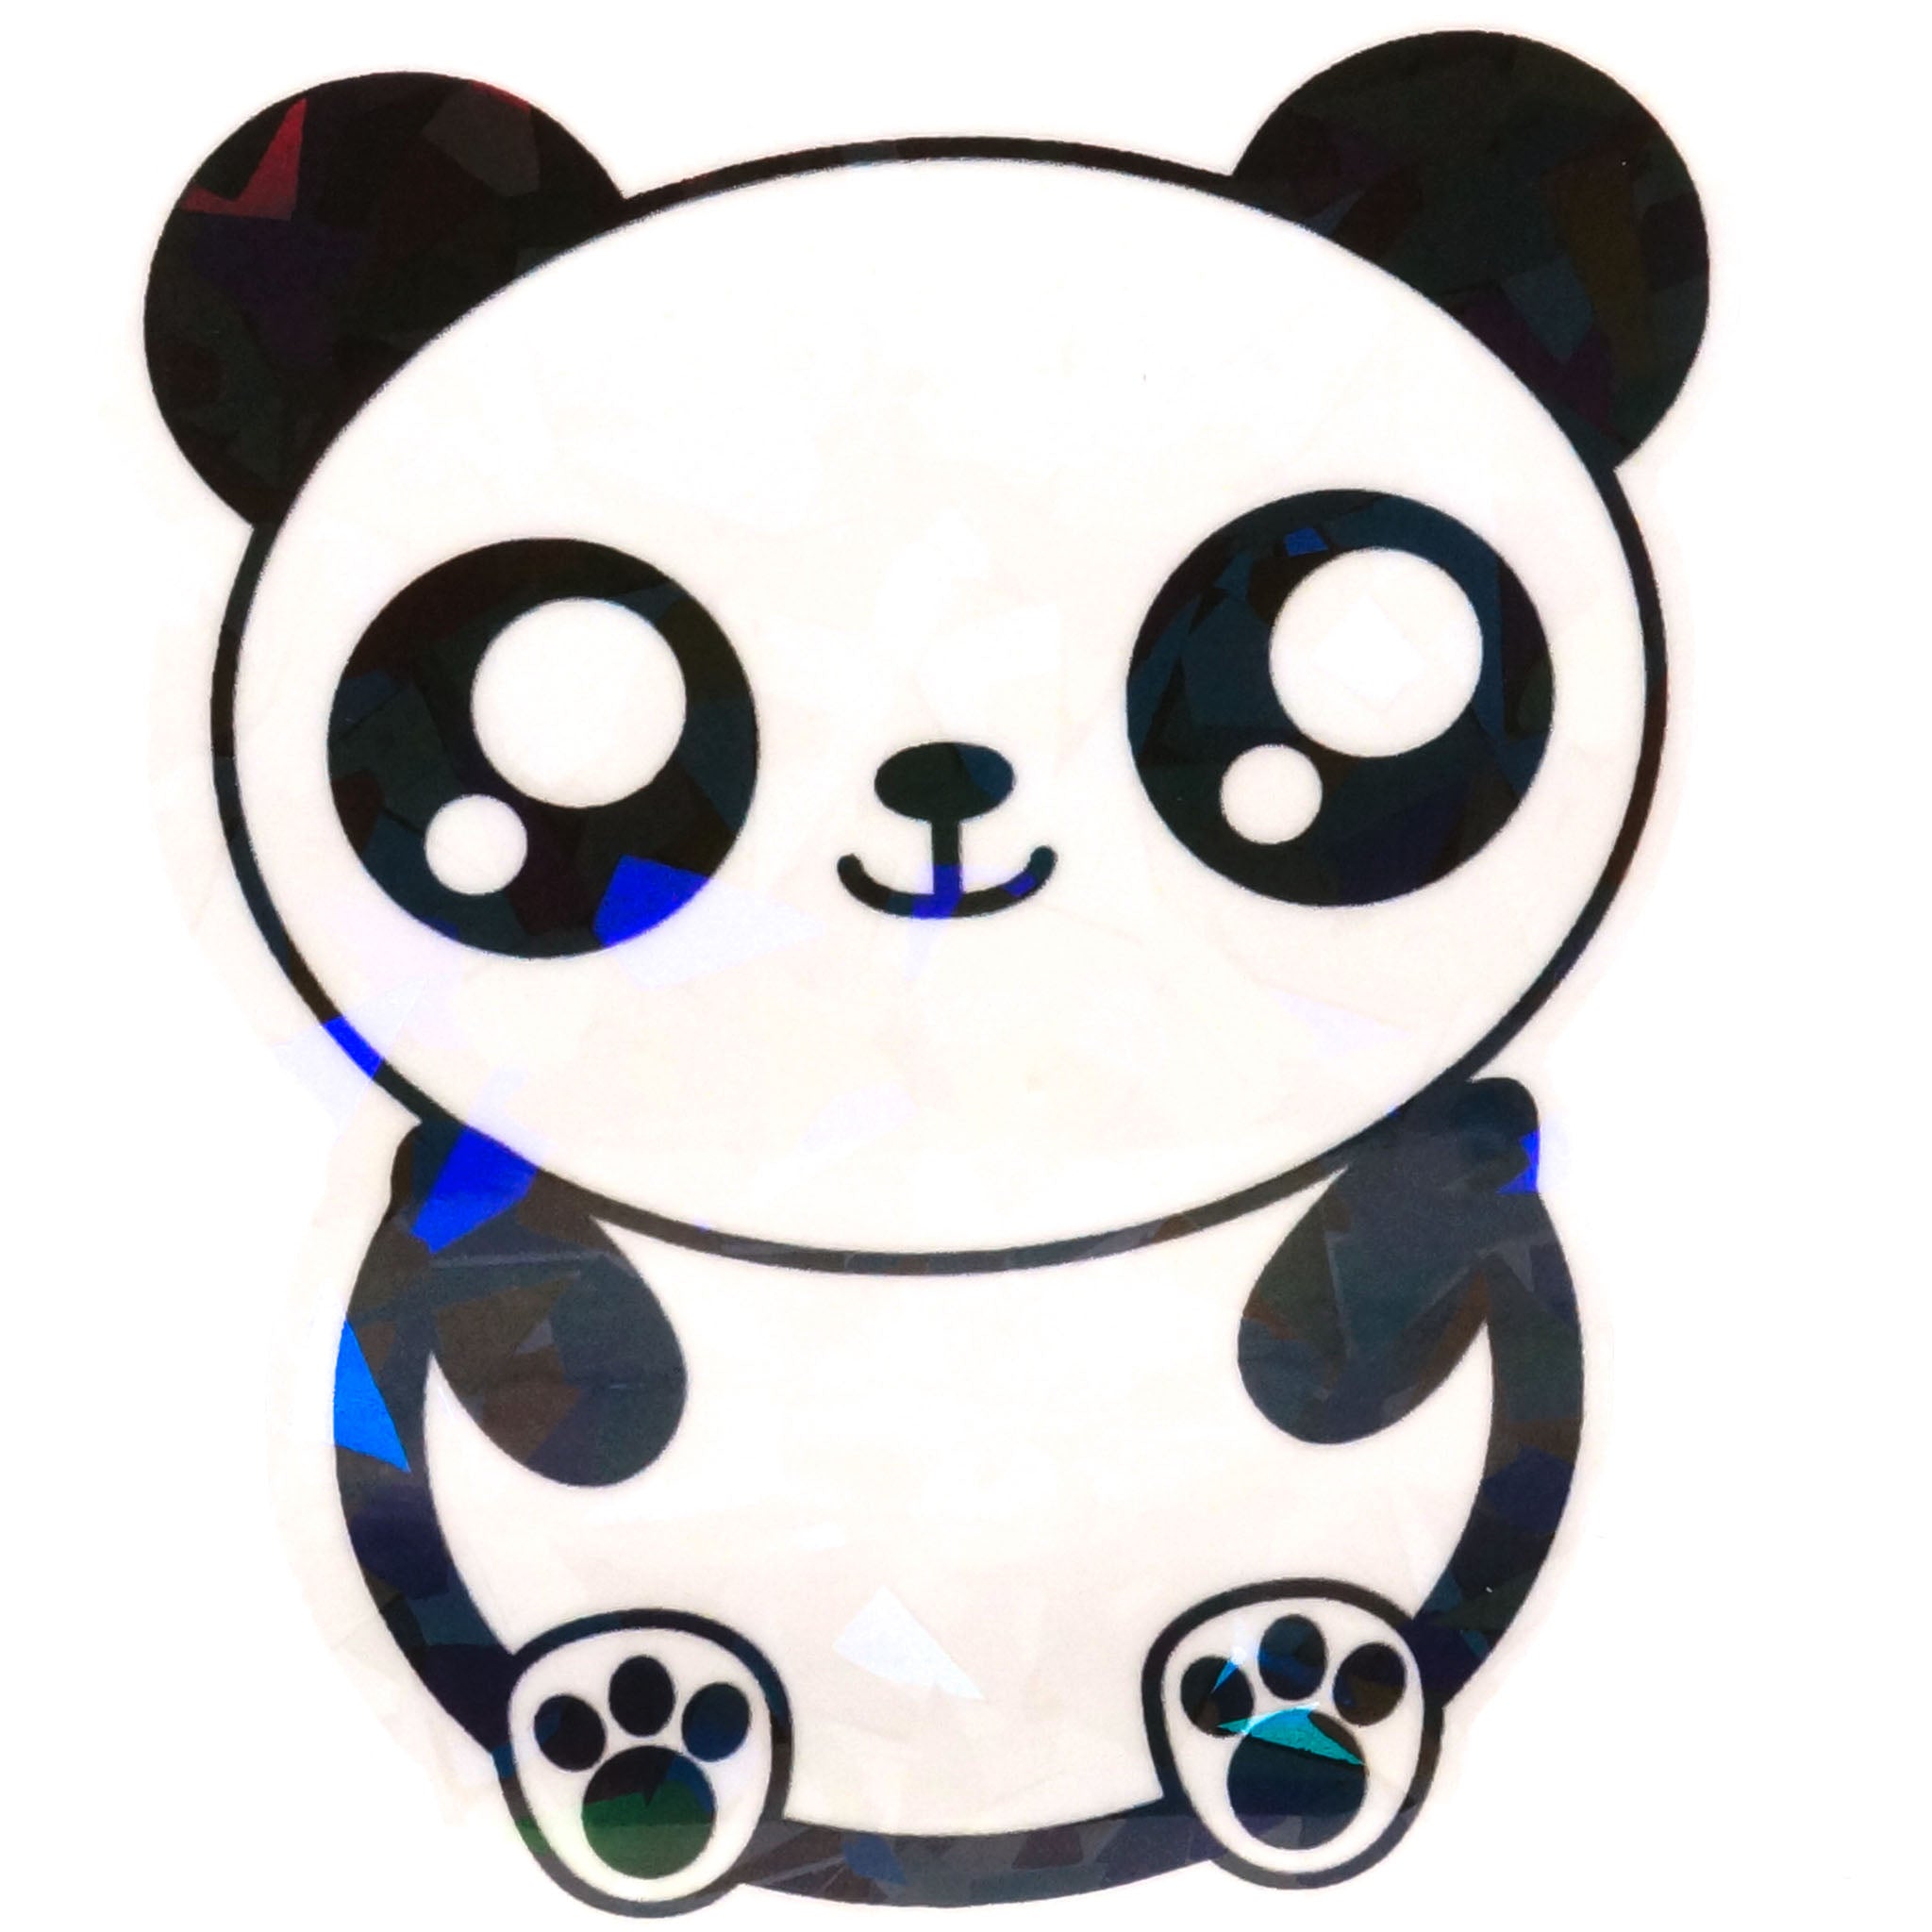 Kawaii Panda Sticker